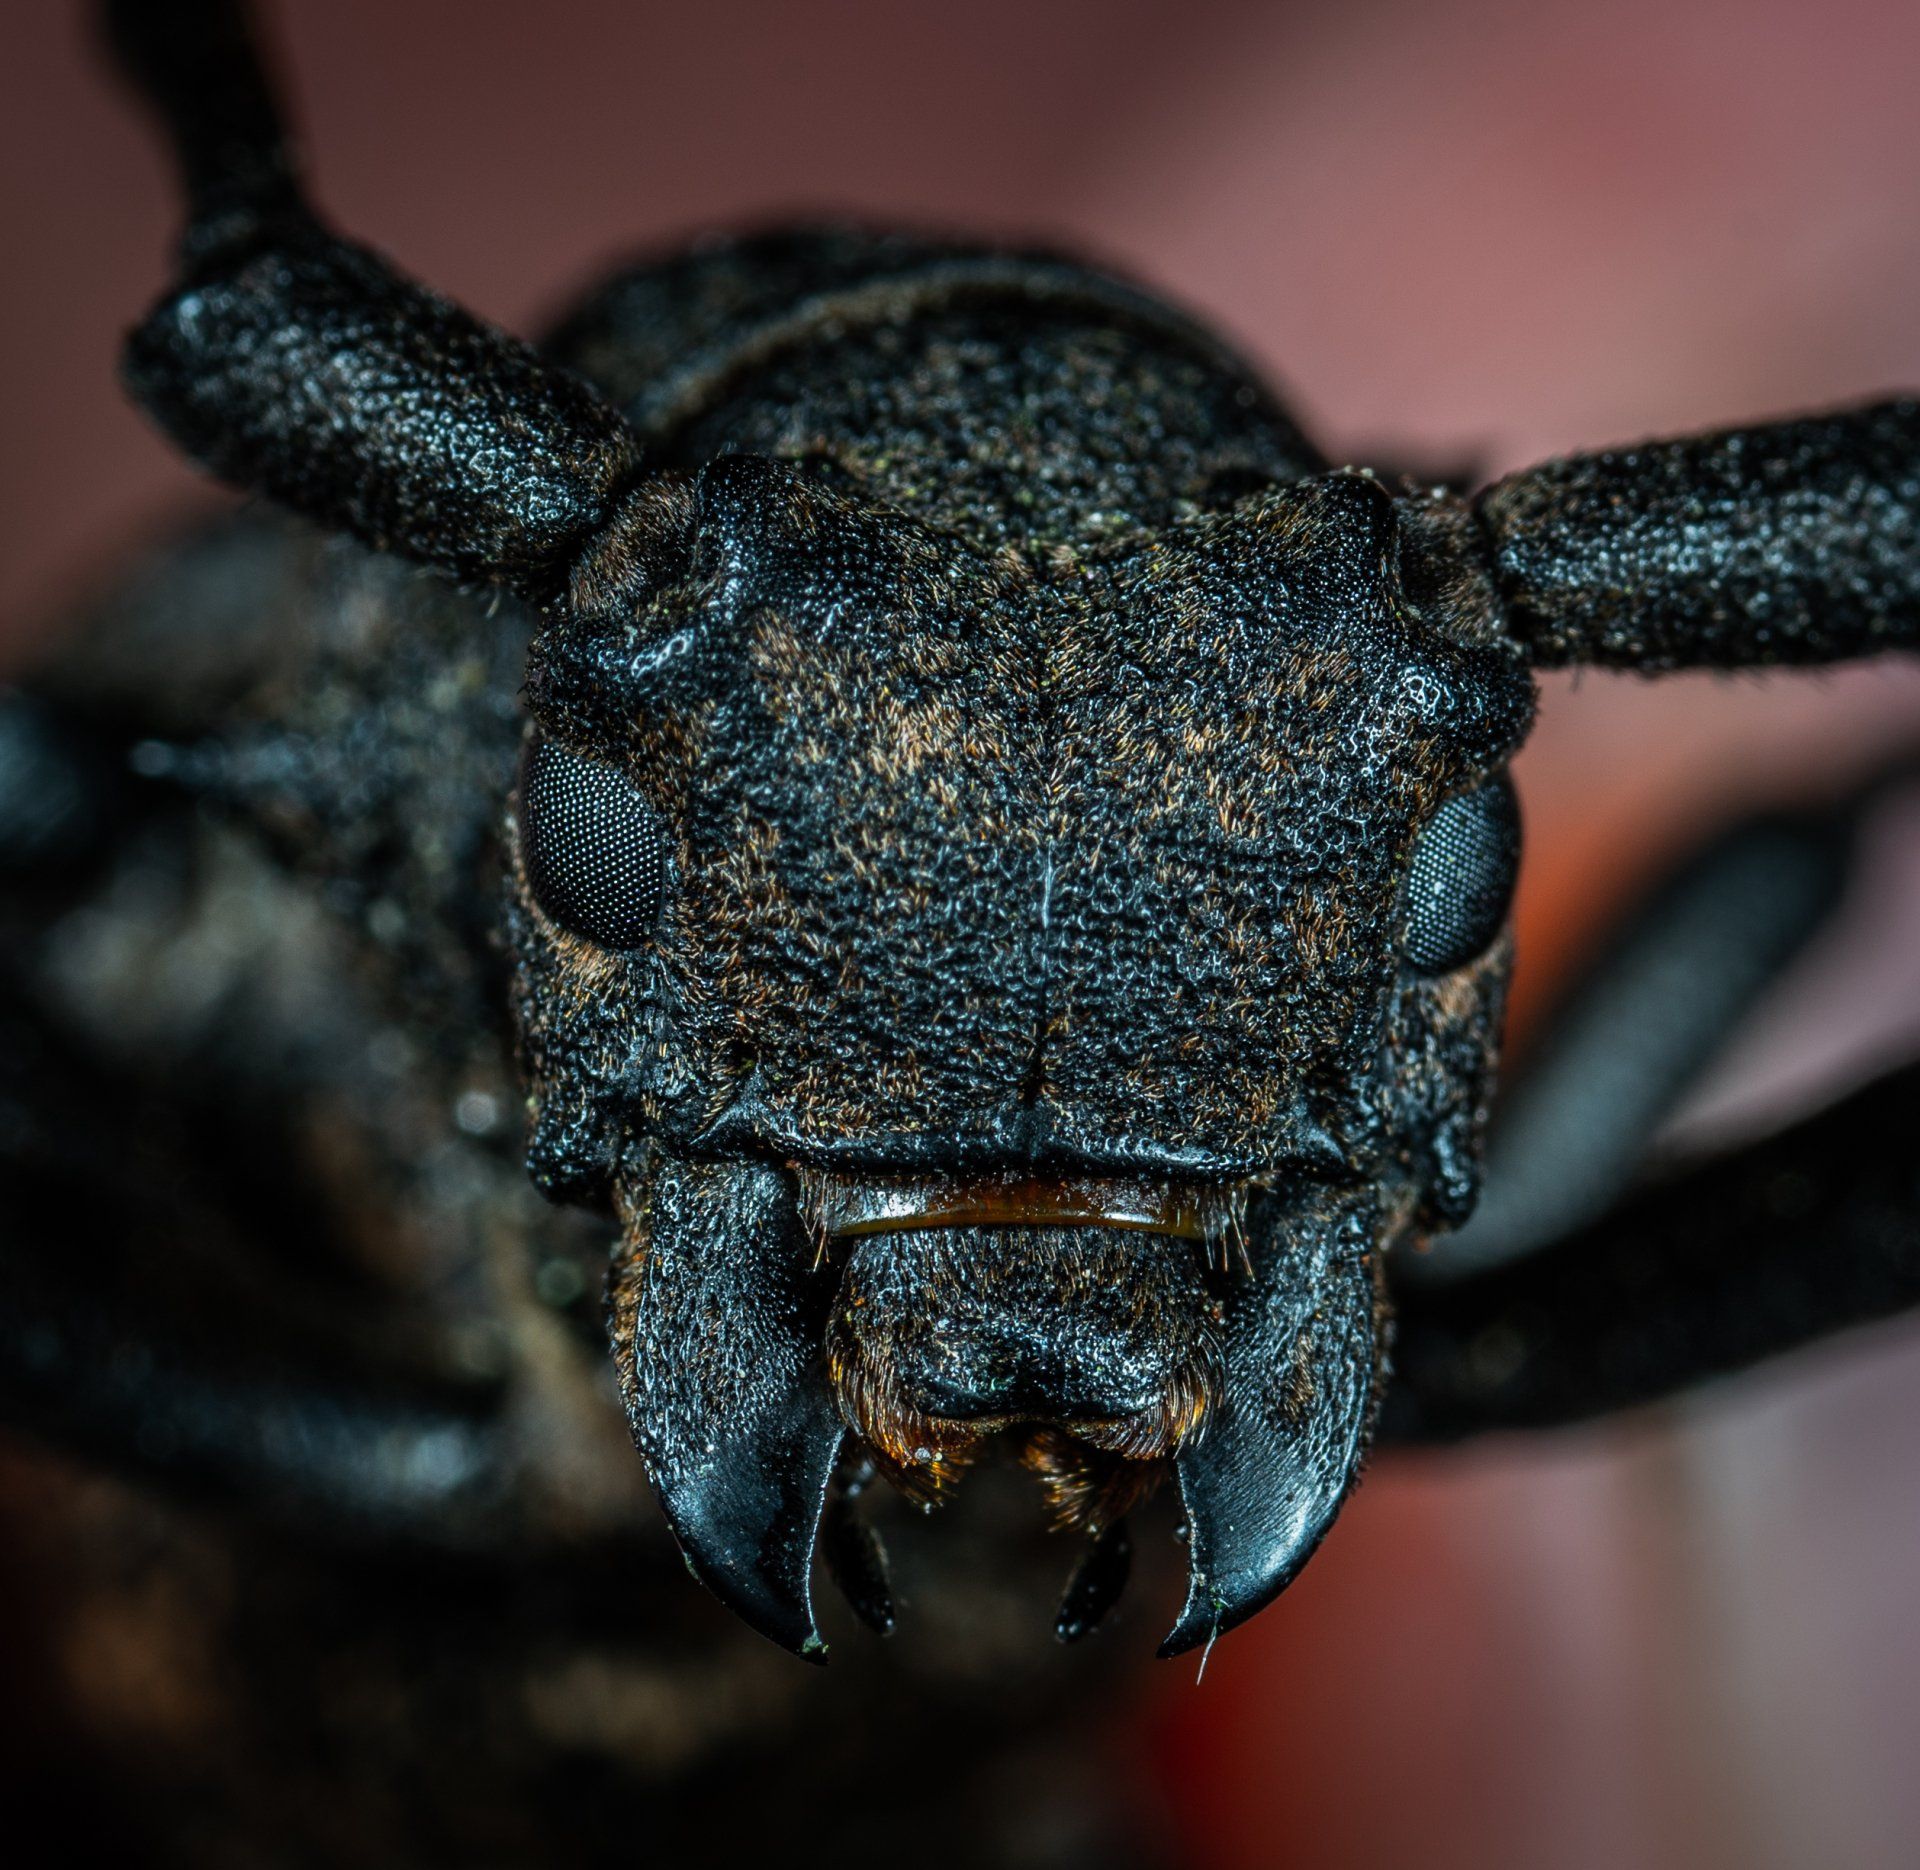 Black bug up close